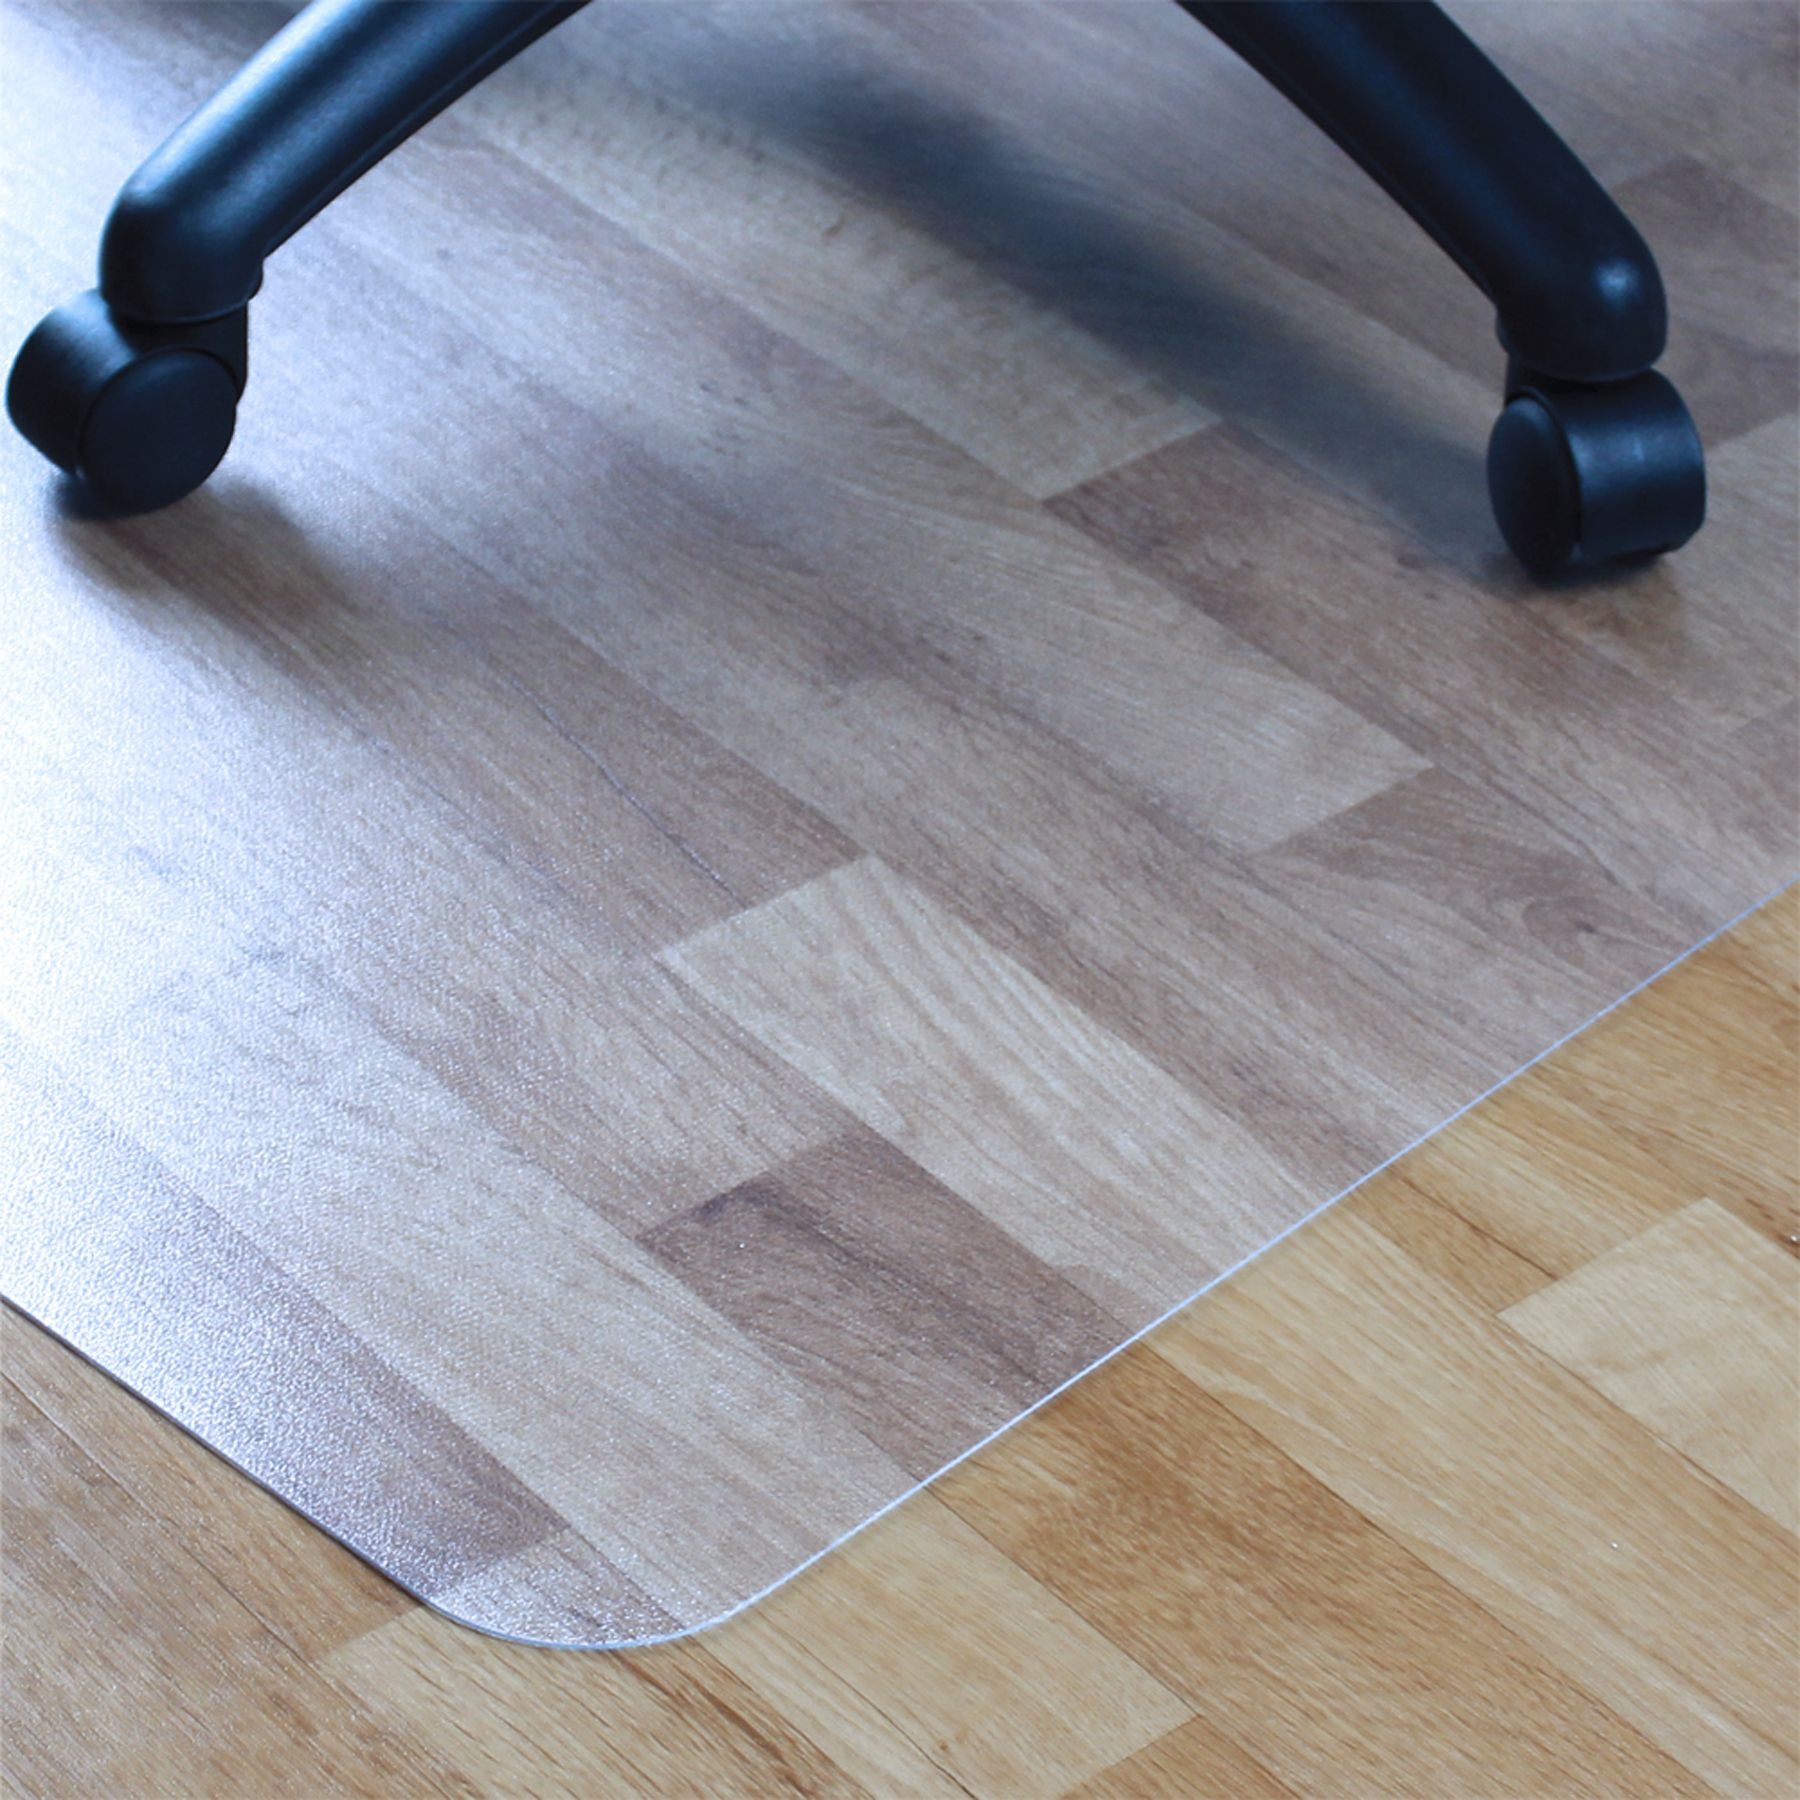 Office Chair Mat for Hardwood and Tile Floor Rectangular Chairmat Floor Protector Mat for Home/Office 